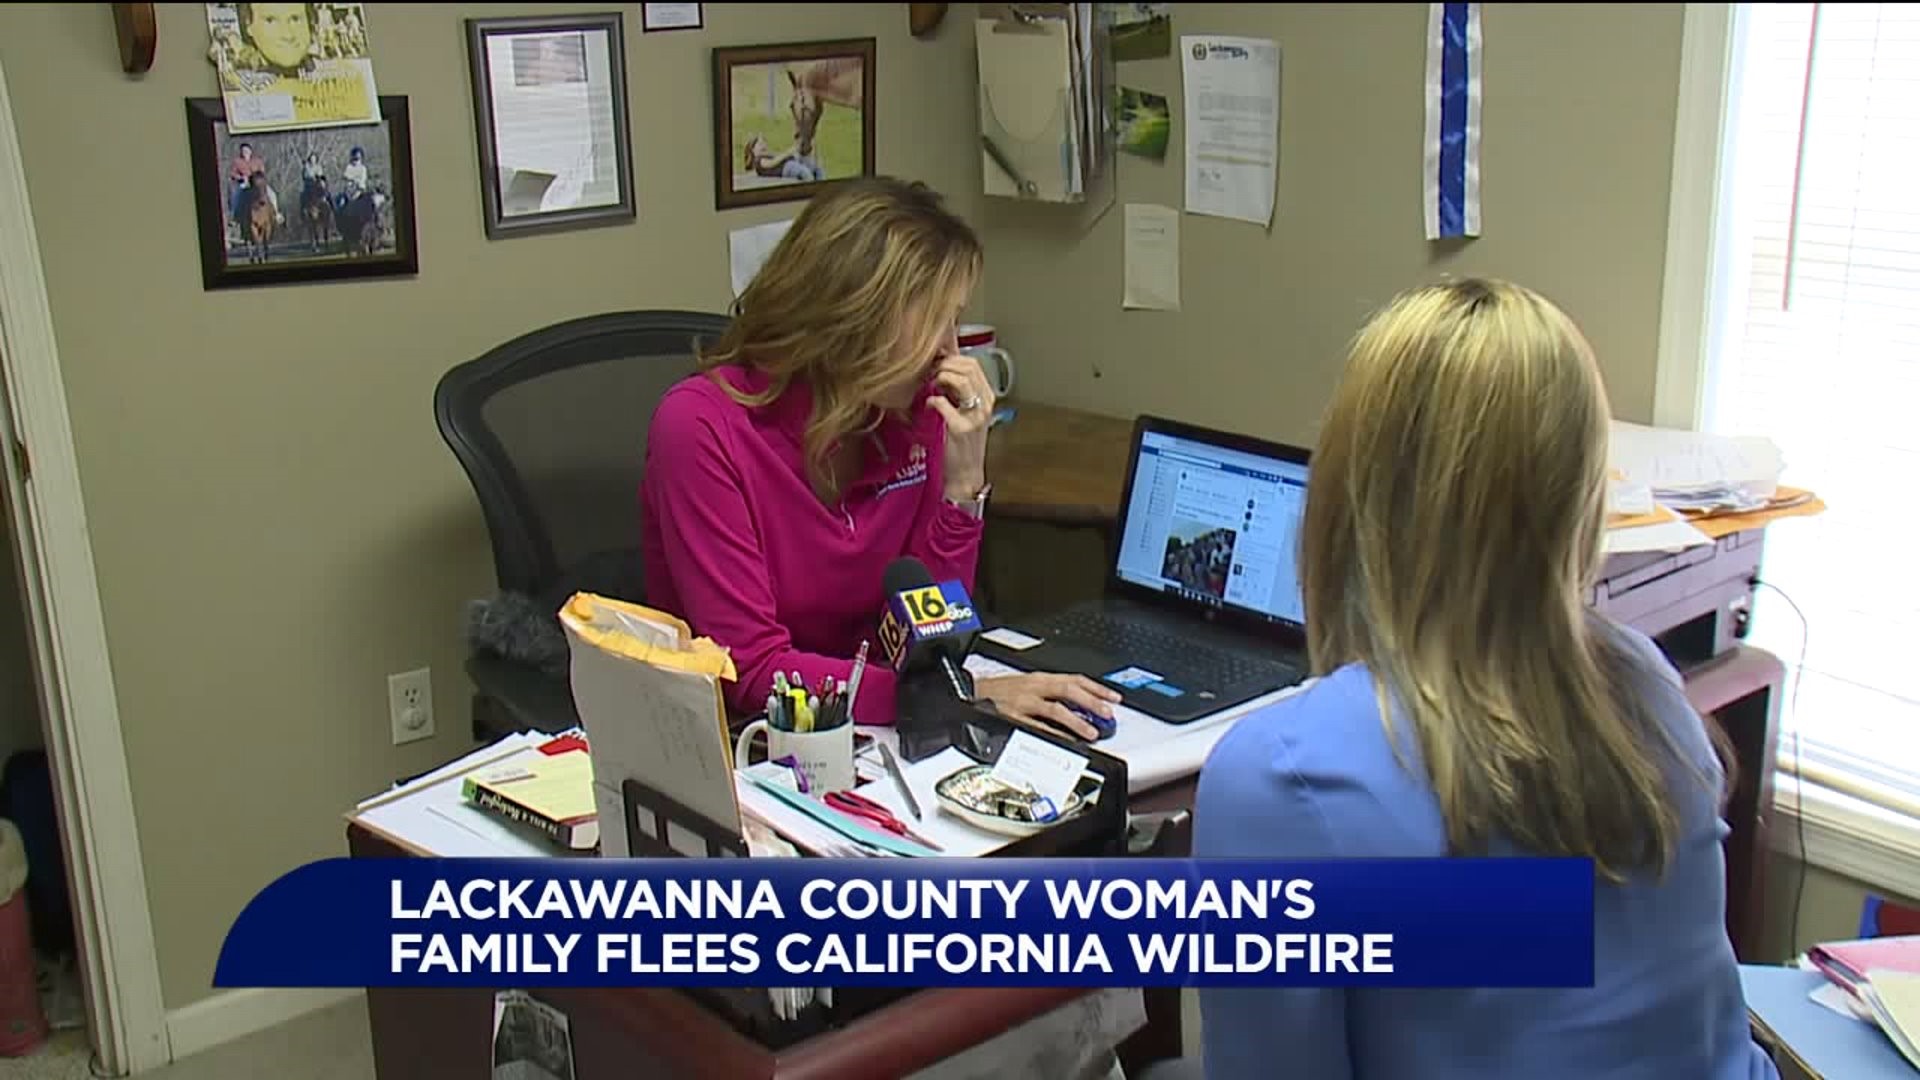 Family of Lackawanna County Woman Flees California Wildfires